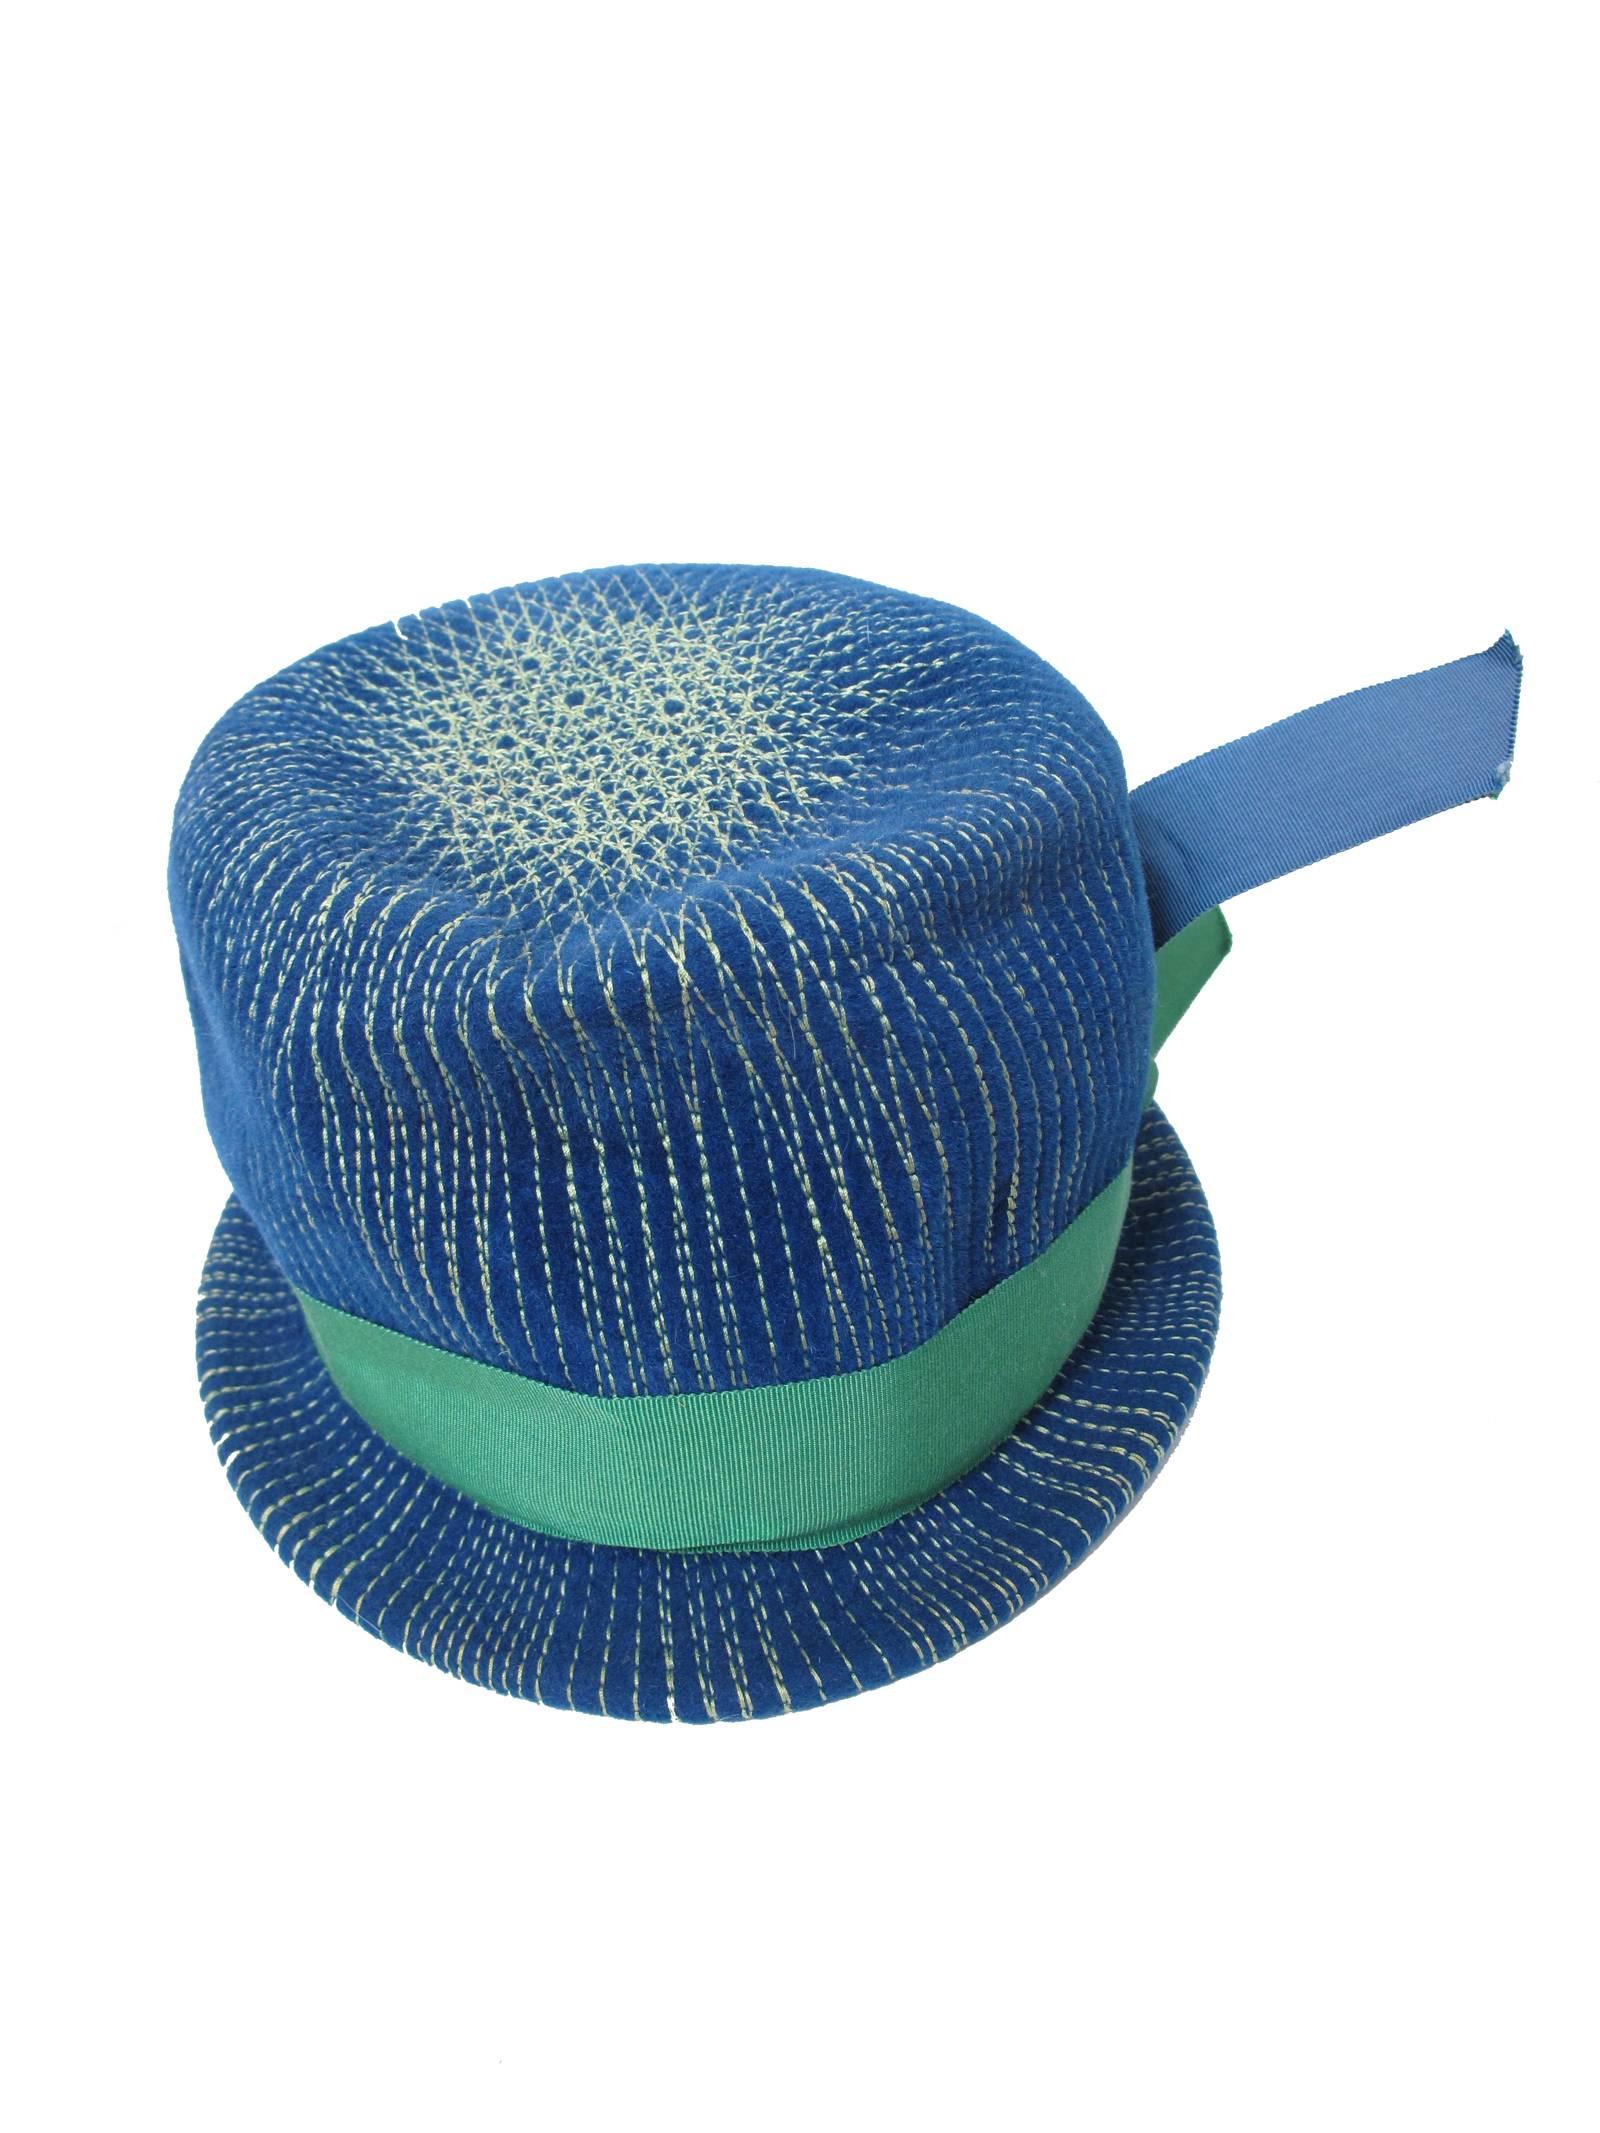 Blue Schiaparelli Hat with Stitching Detail